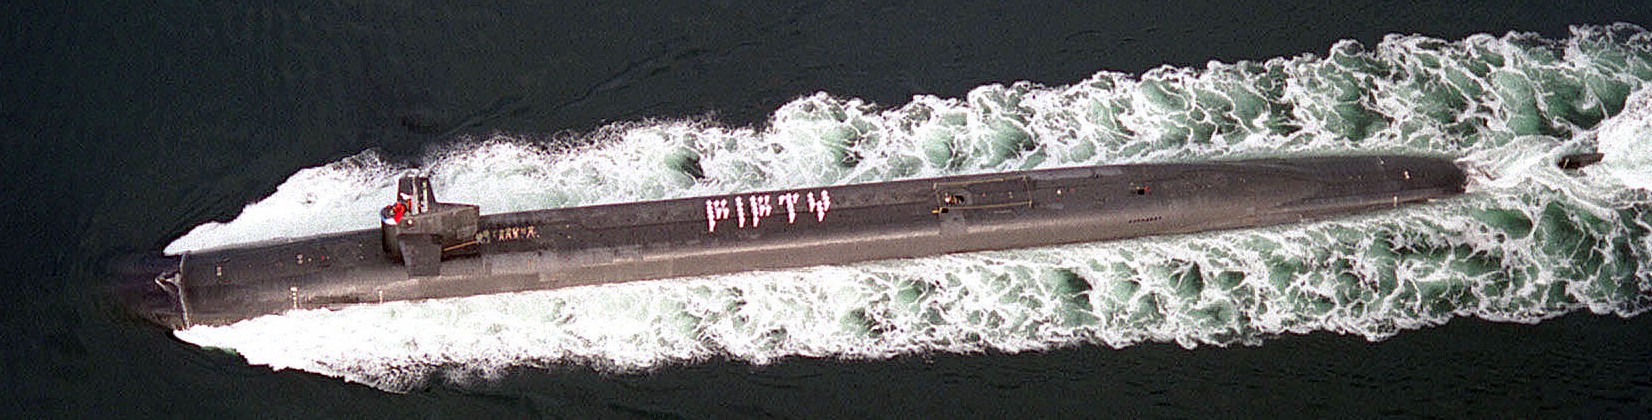 ssbn-726 uss ohio ballistic missile submarine us navy 1998 106